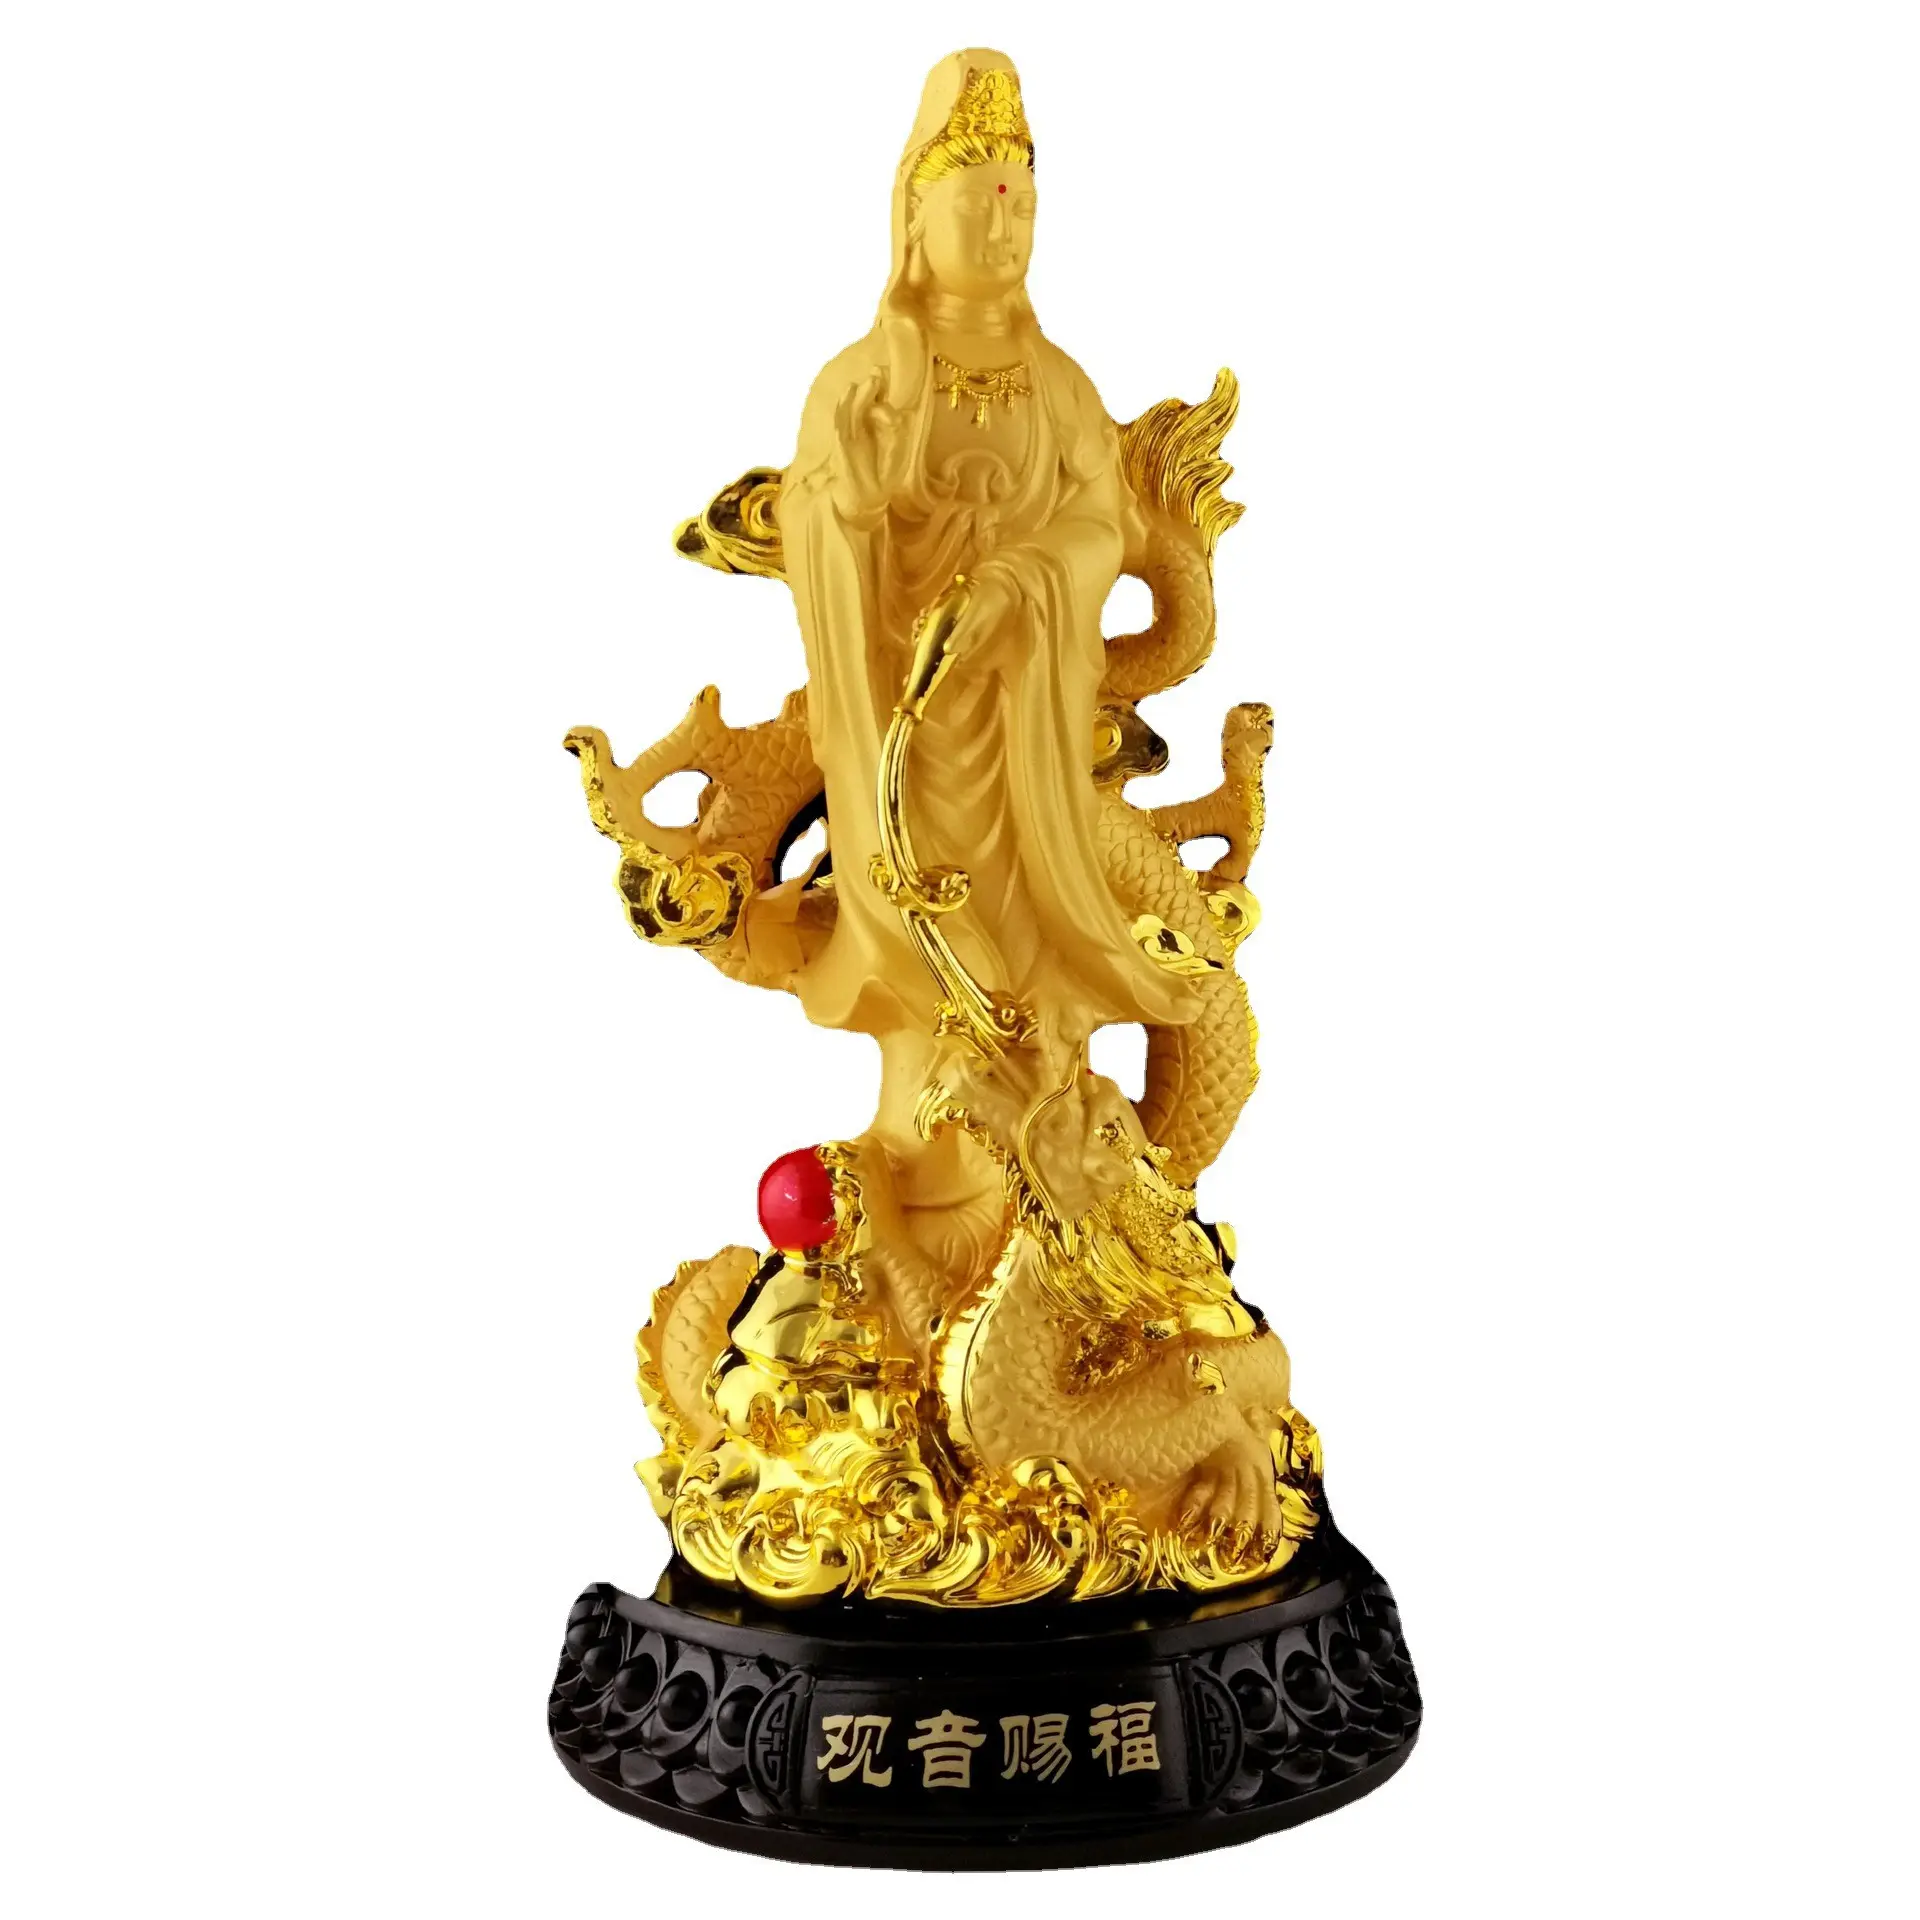 बुद्ध छोटे प्रतिमा अनुसूचित जनजाति घर पूजा करने के लिए Nanhai ड्रैगन राइडिंग Guanyin बोधिसत्व की राल आभूषण खड़े देवी दया बुद्ध